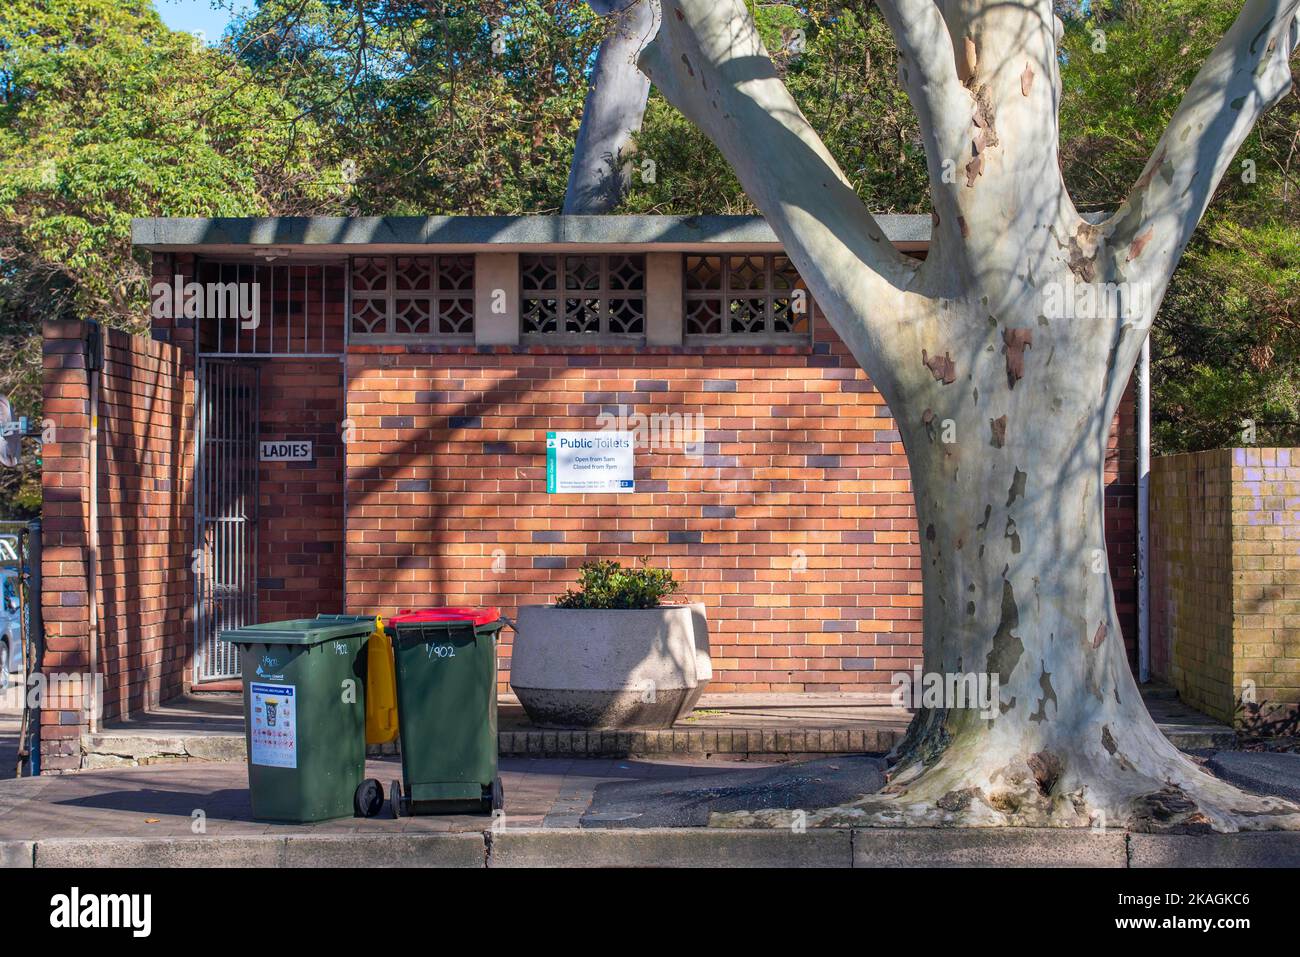 A brick and breeze block public toilet facility on Botany Road in Mascot, Sydney, Australia Stock Photo